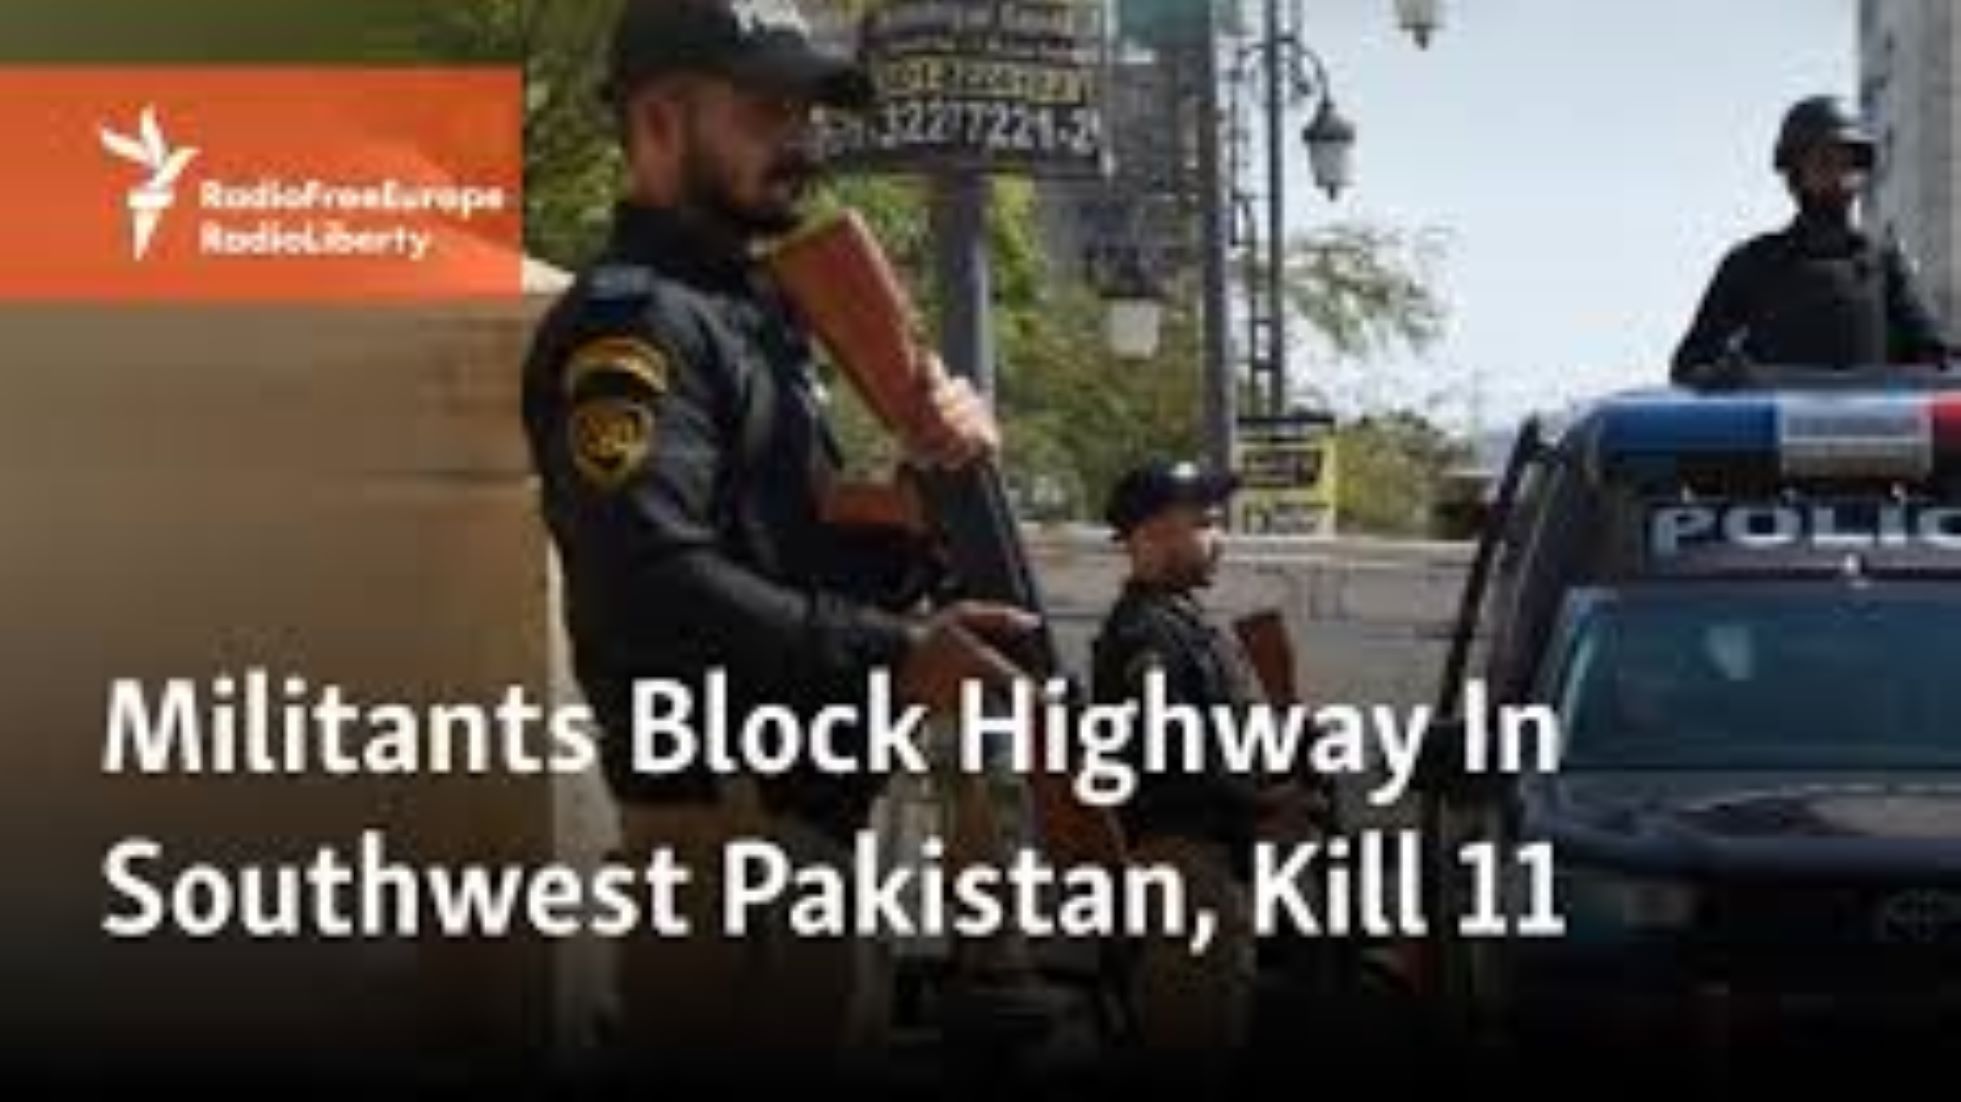 11 Killed, Four Injured In Militants Highway Blockade In SW Pakistan